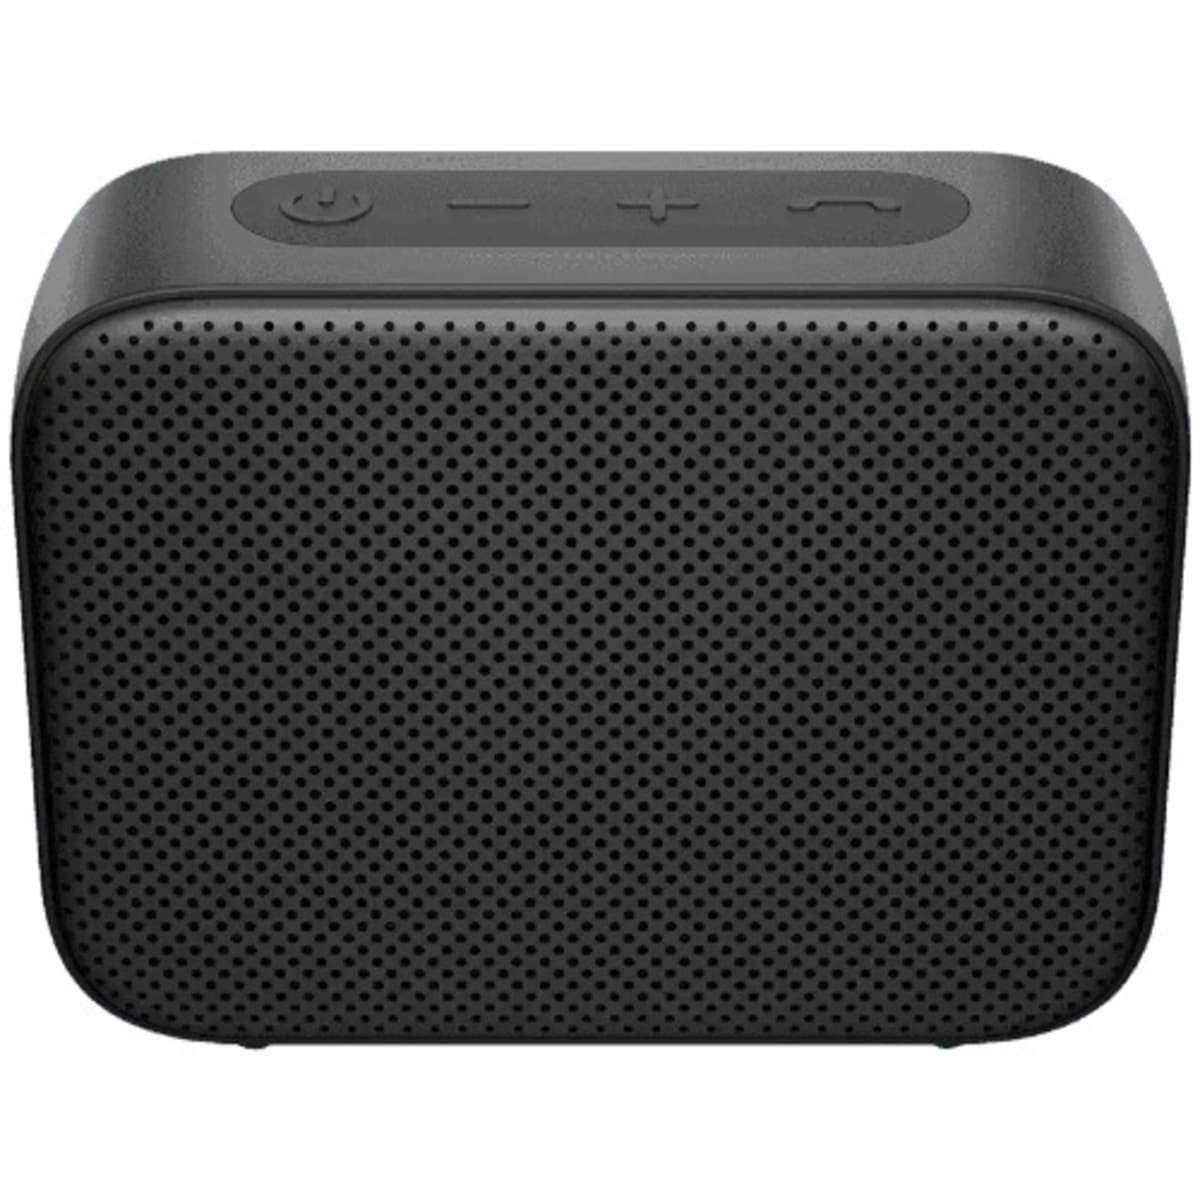 HP Bluetooth Speaker - 350 - Black | Konga Online Shopping